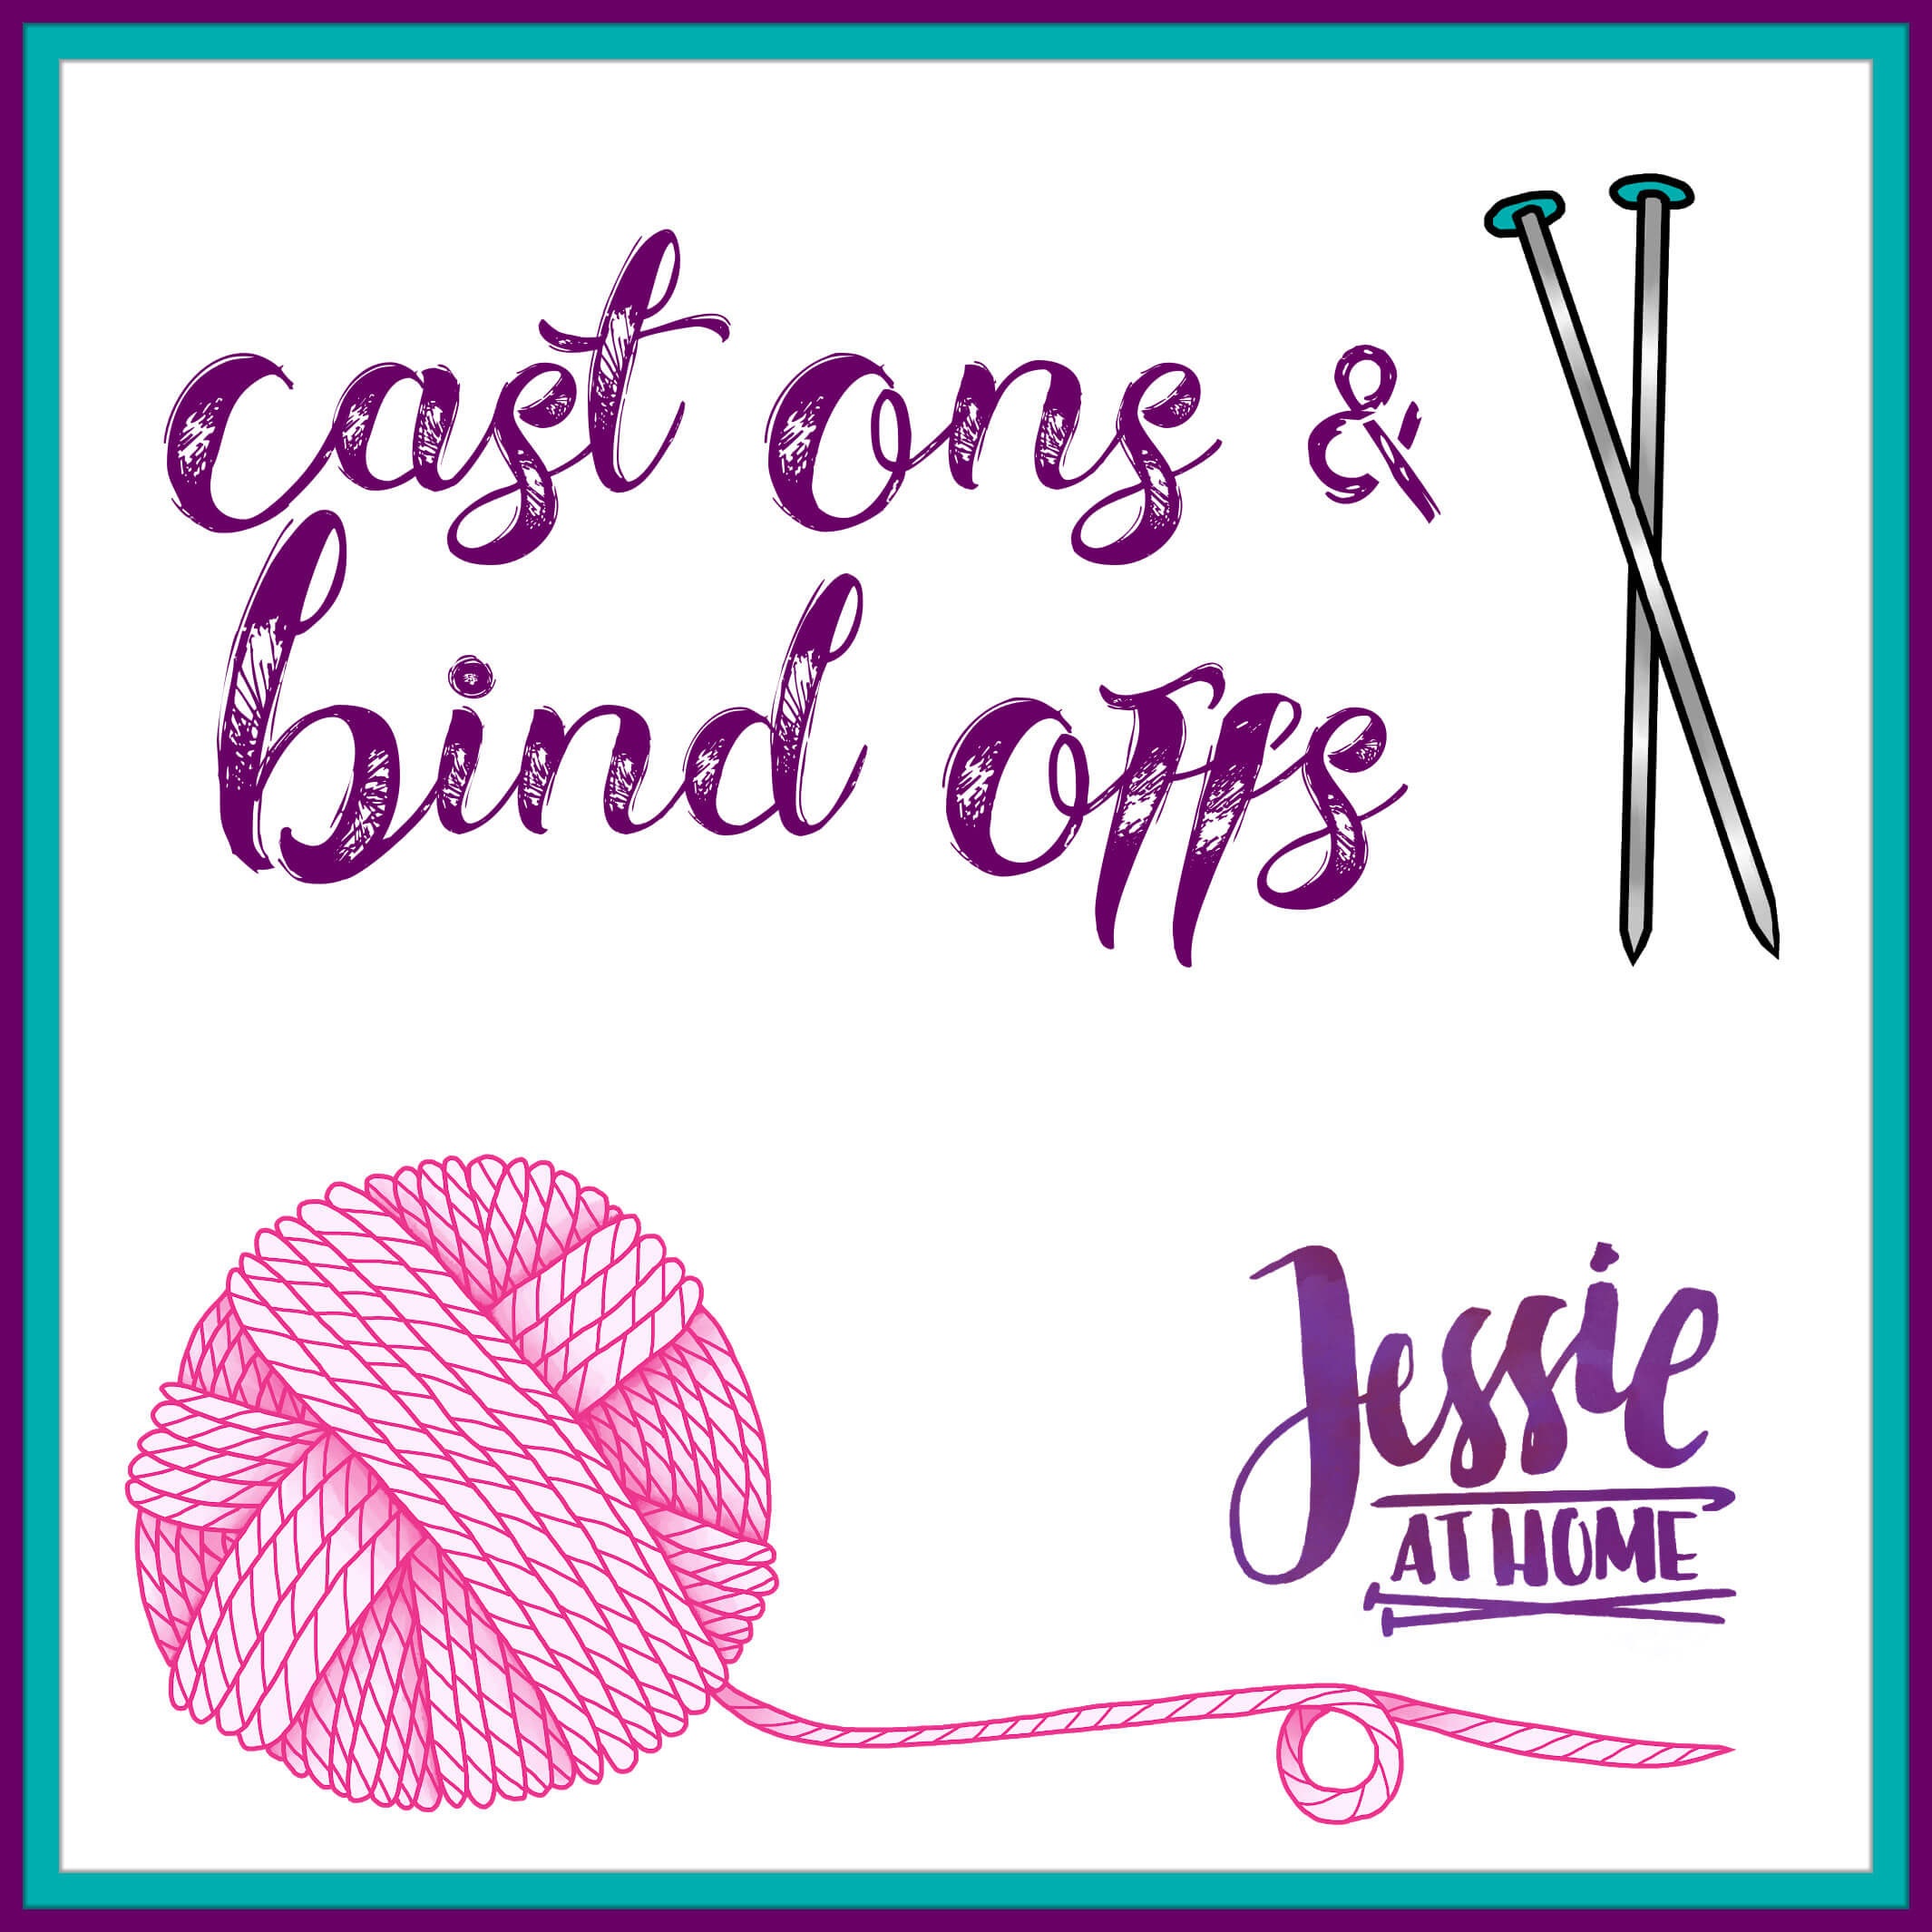 Knit Cast On & Bind Off Menu on Jessie At Home